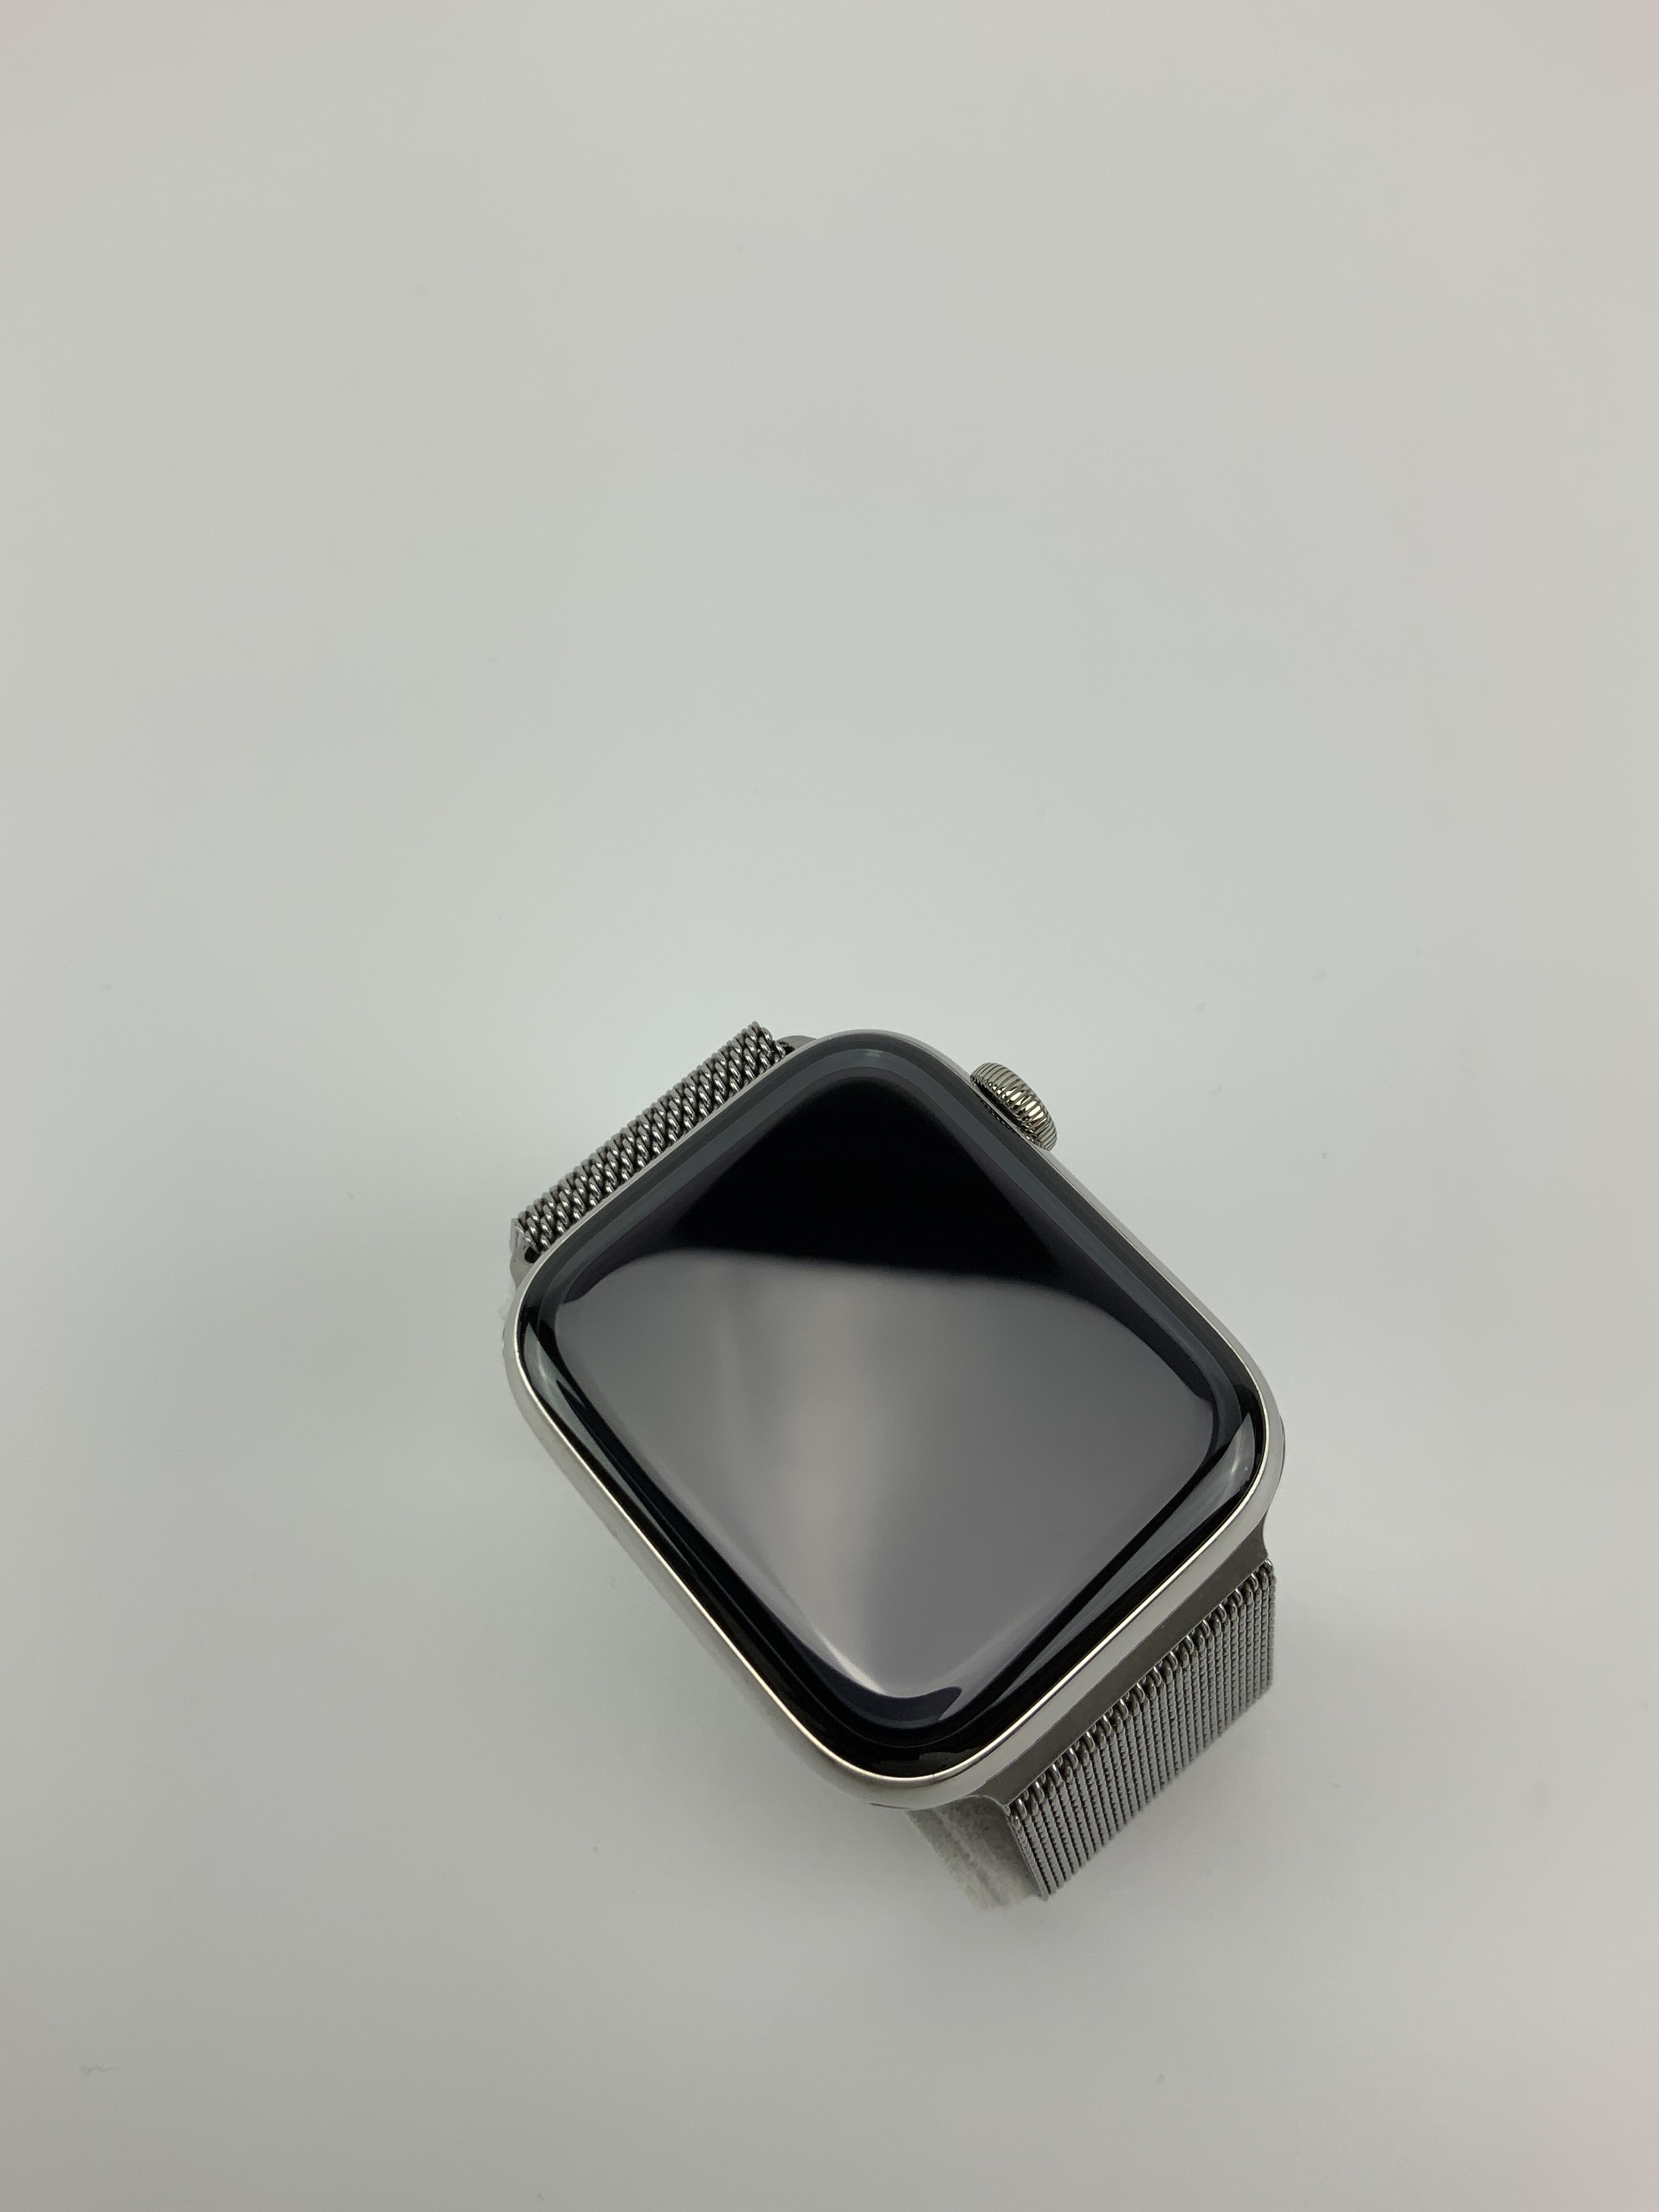 Watch Series 5 Steel Cellular (44mm), Silver, imagen 3